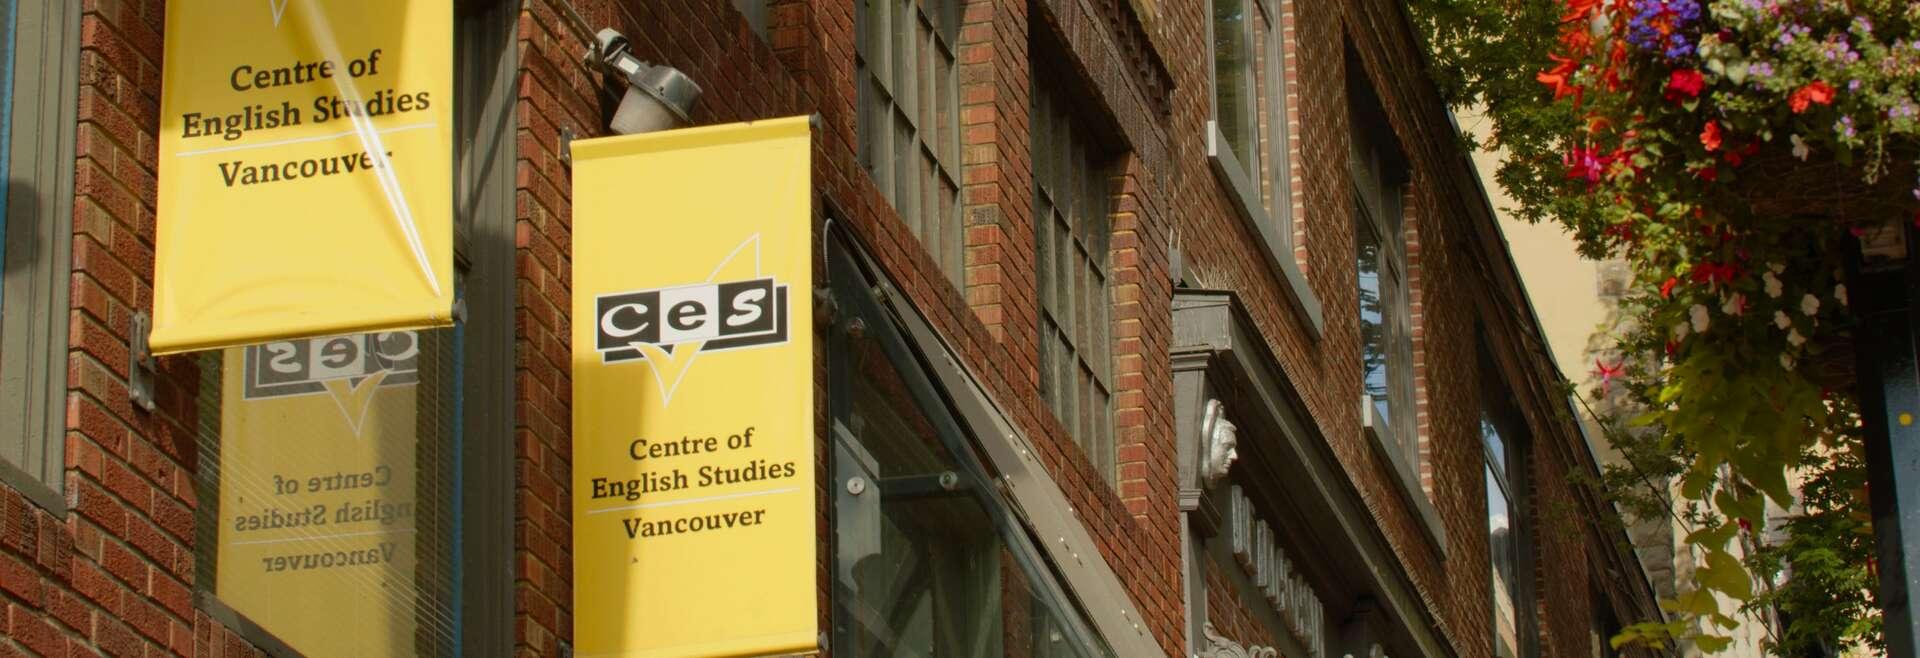 Sprachaufenthalt Kanada, Vancouver, CES Vancouver, Gebäude